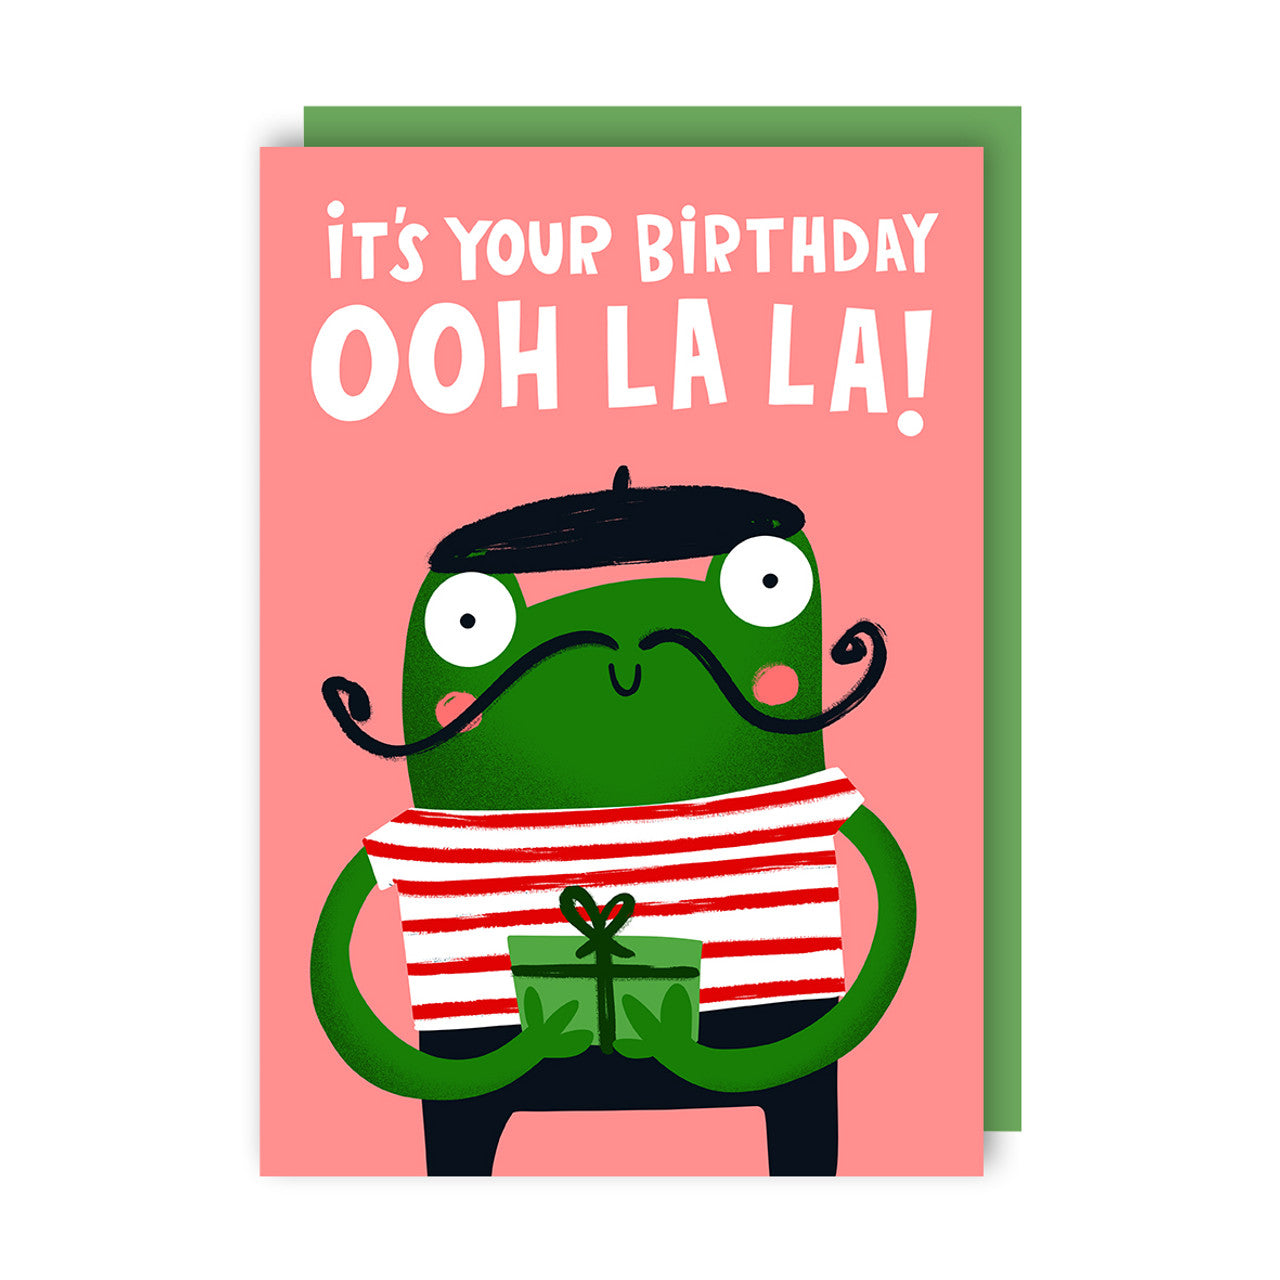 Frog Birthday Card text reads "It's your birthday ooh la la!"